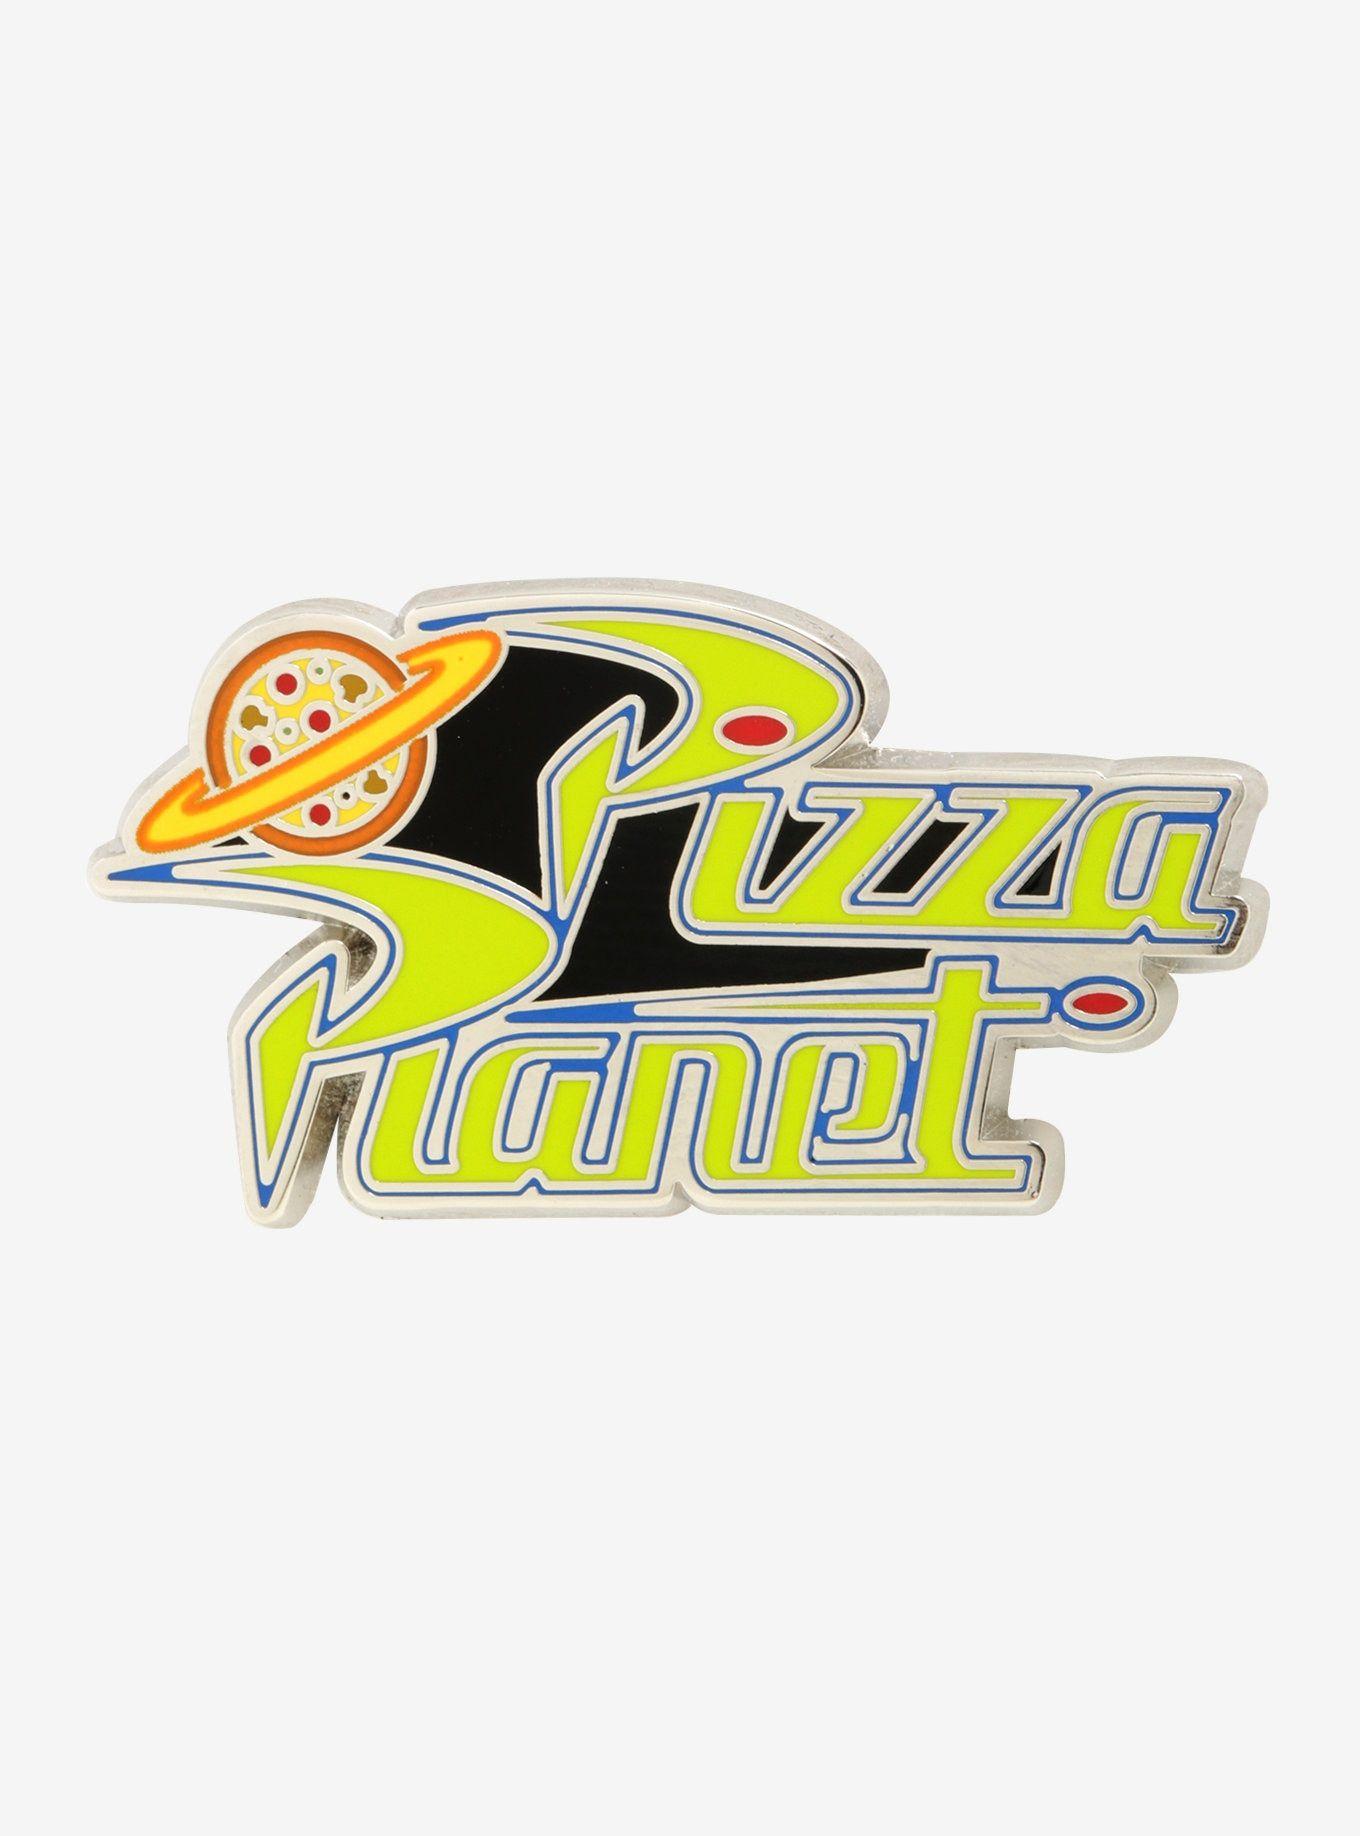 Disney Pixar Toy Story Logo - Disney Pixar Toy Story Pizza Planet Logo Enamel Pin - BoxLunch Exclusive